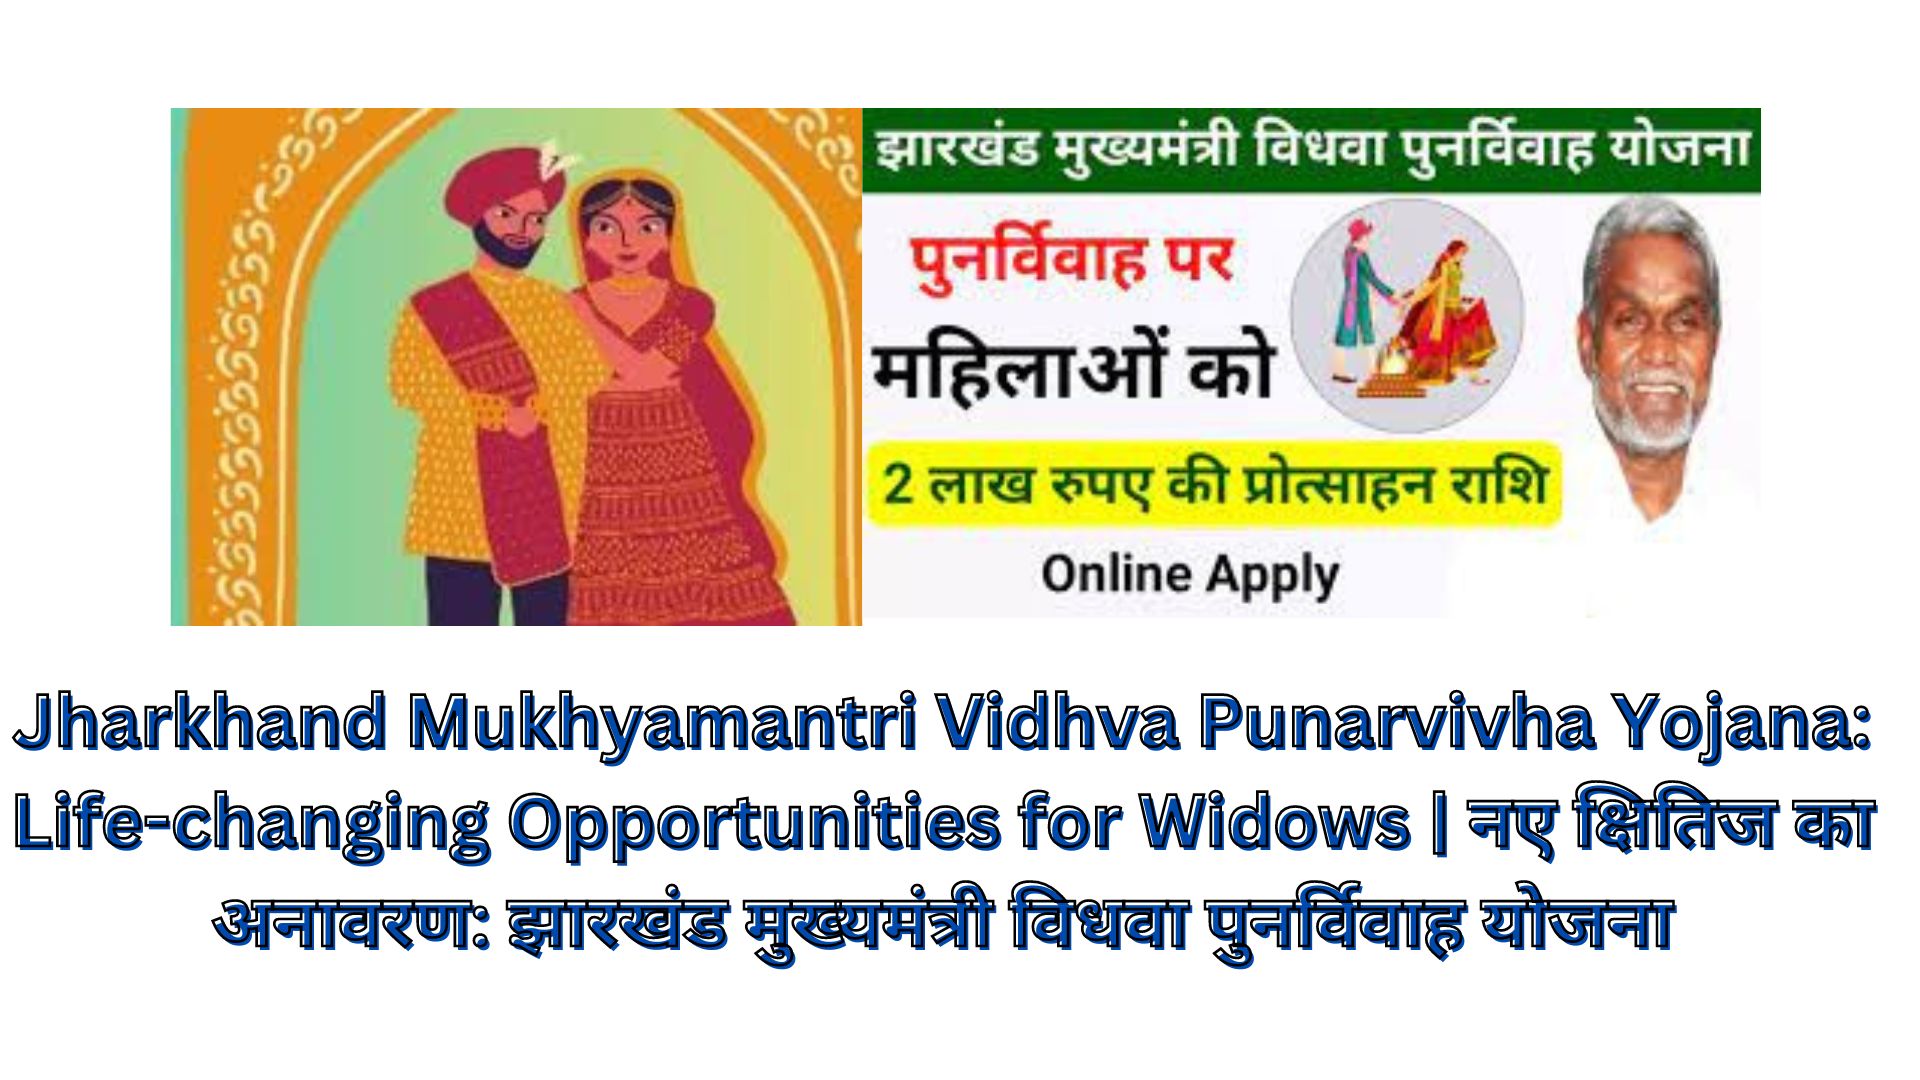 Jharkhand Mukhyamantri Vidhva Punarvivha Yojana: Life-changing Opportunities for Widows | नए क्षितिज का अनावरण: झारखंड मुख्यमंत्री विधवा पुनर्विवाह योजना